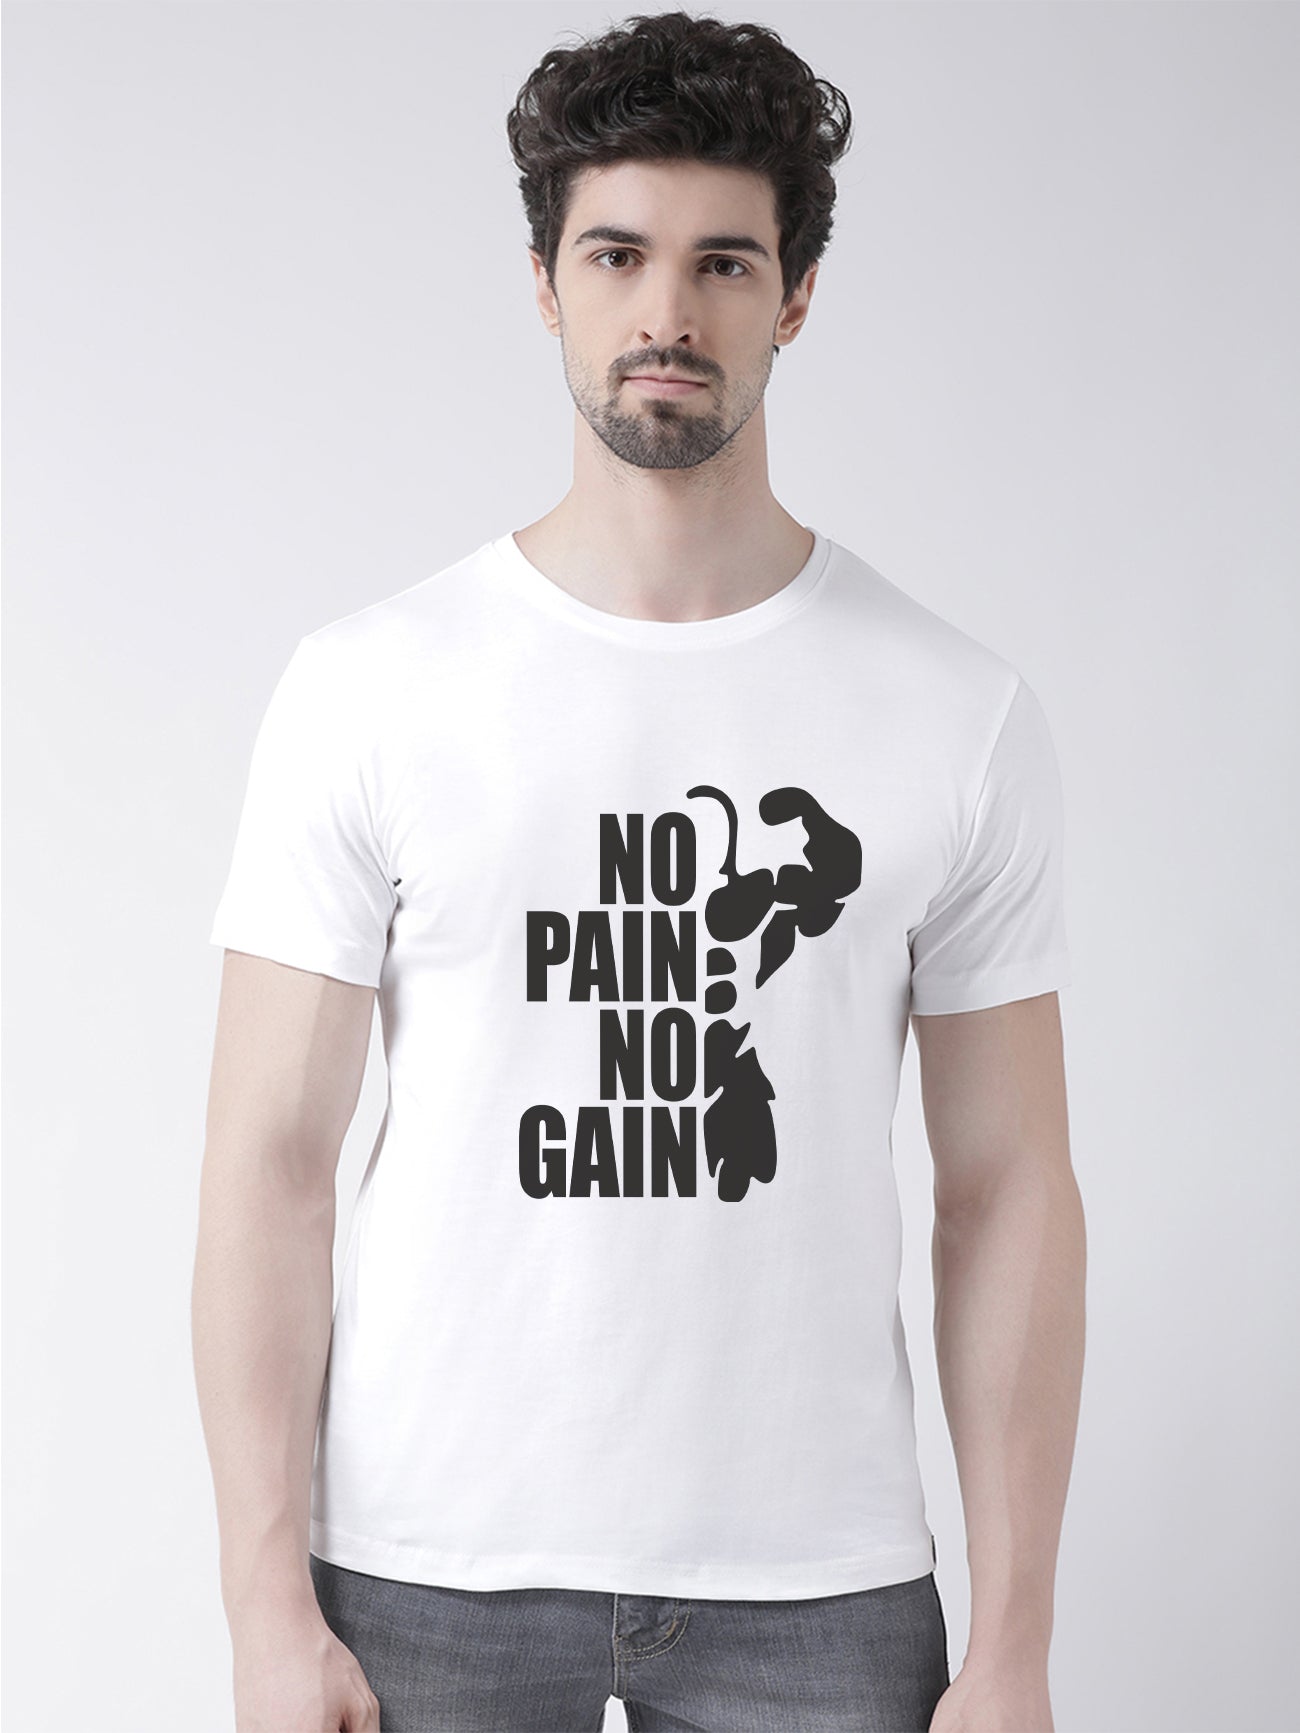 Men's Pack Of 2 Navy & White Printed Half Sleeves T-Shirt - Friskers